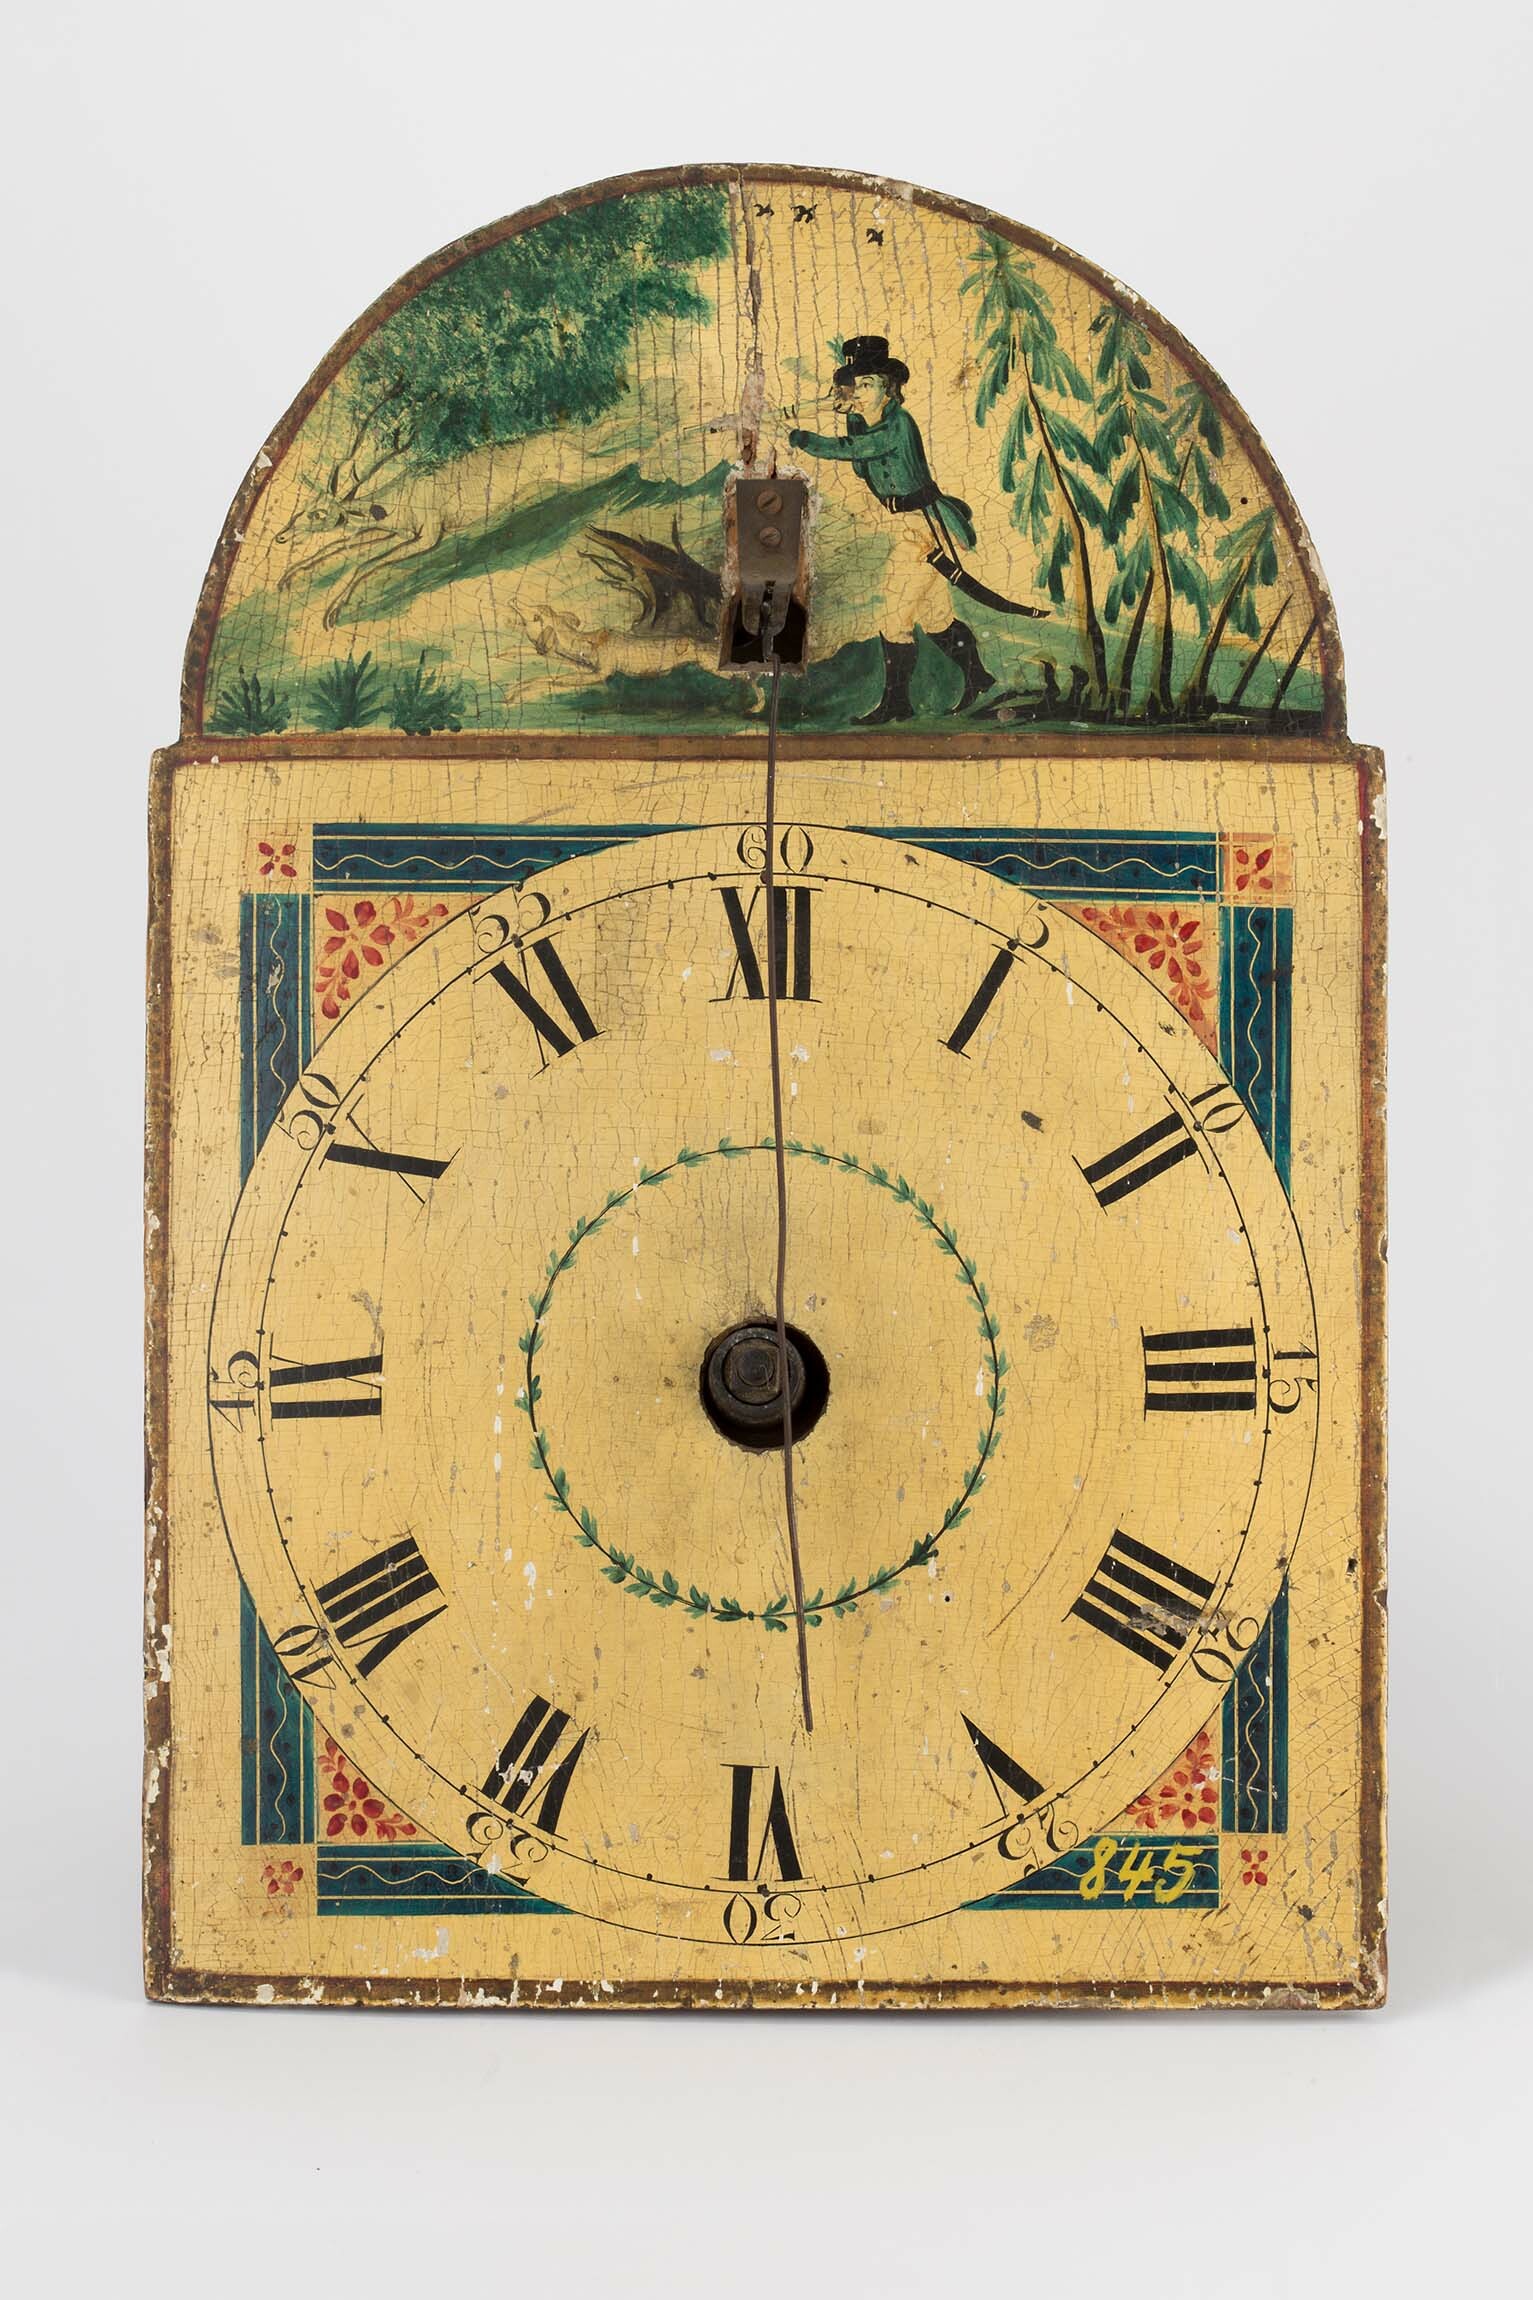 Lackschilduhr, Joseph Dilger, Glottertal, 1806 (Deutsches Uhrenmuseum CC BY-SA)